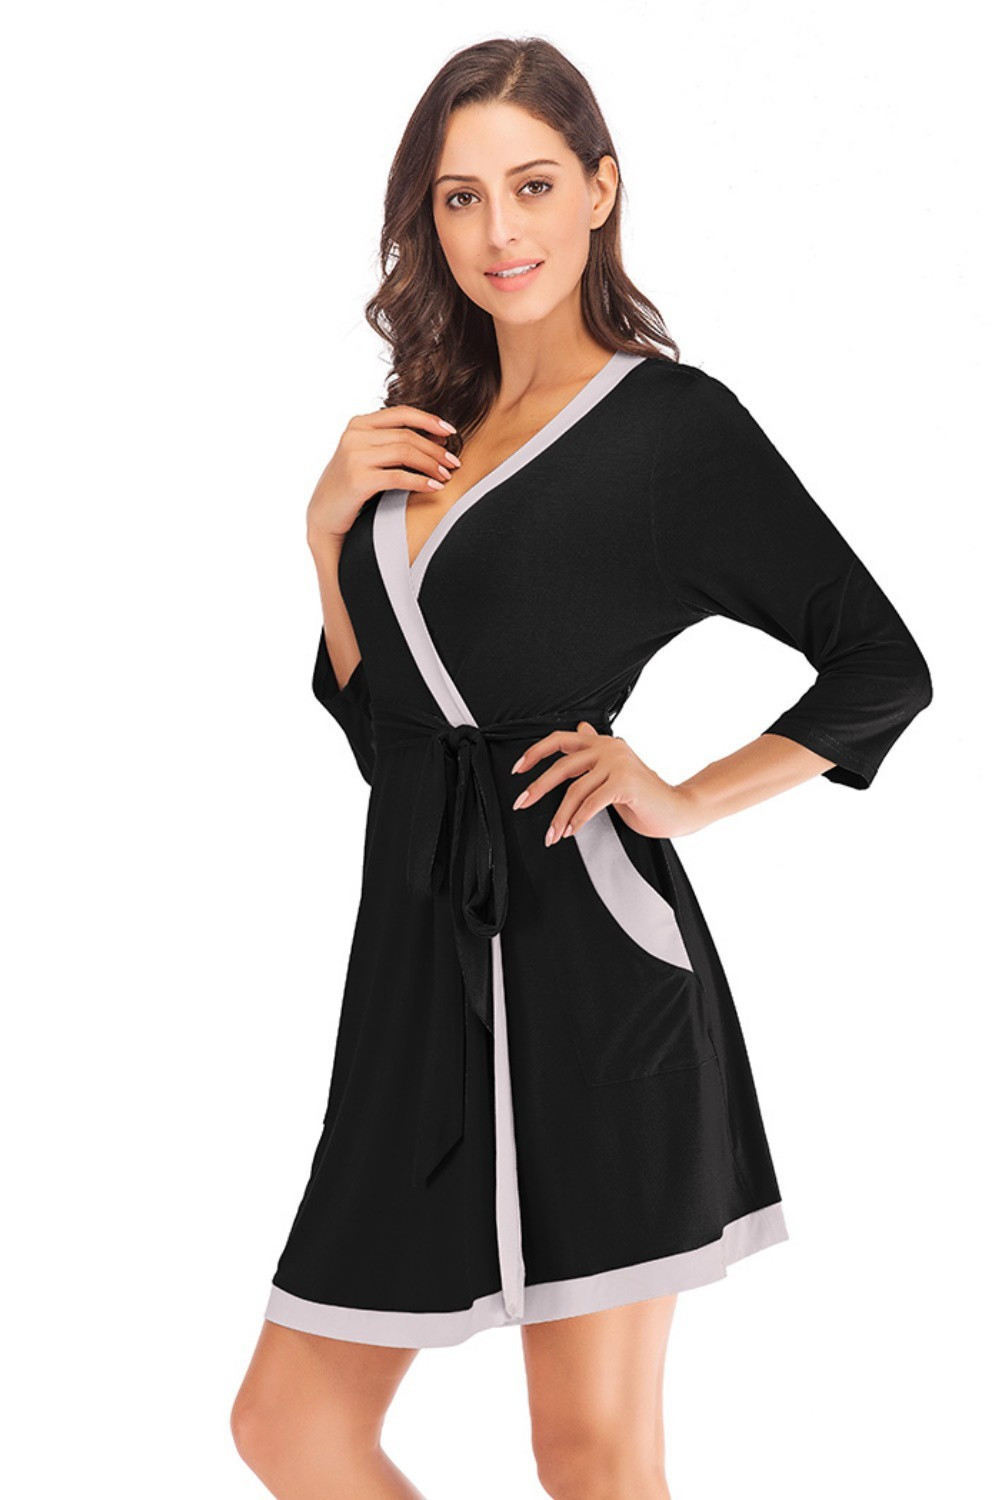 Plus size black negligee